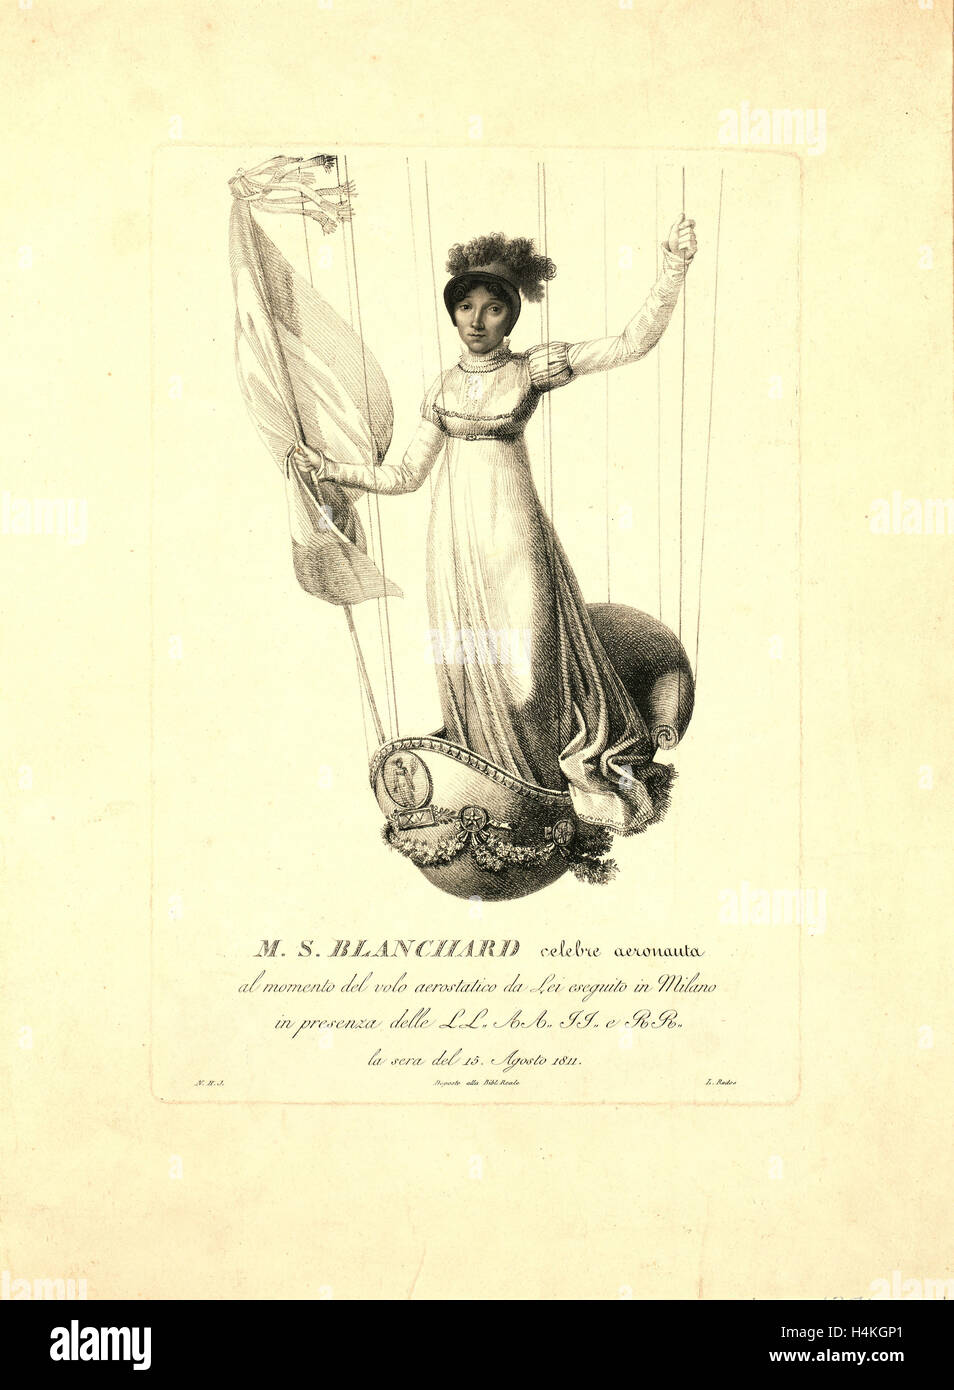 M.S. Blanchard,  (Madeleine Sophie Armand) French aeronaut, 19th century engraving Stock Photo